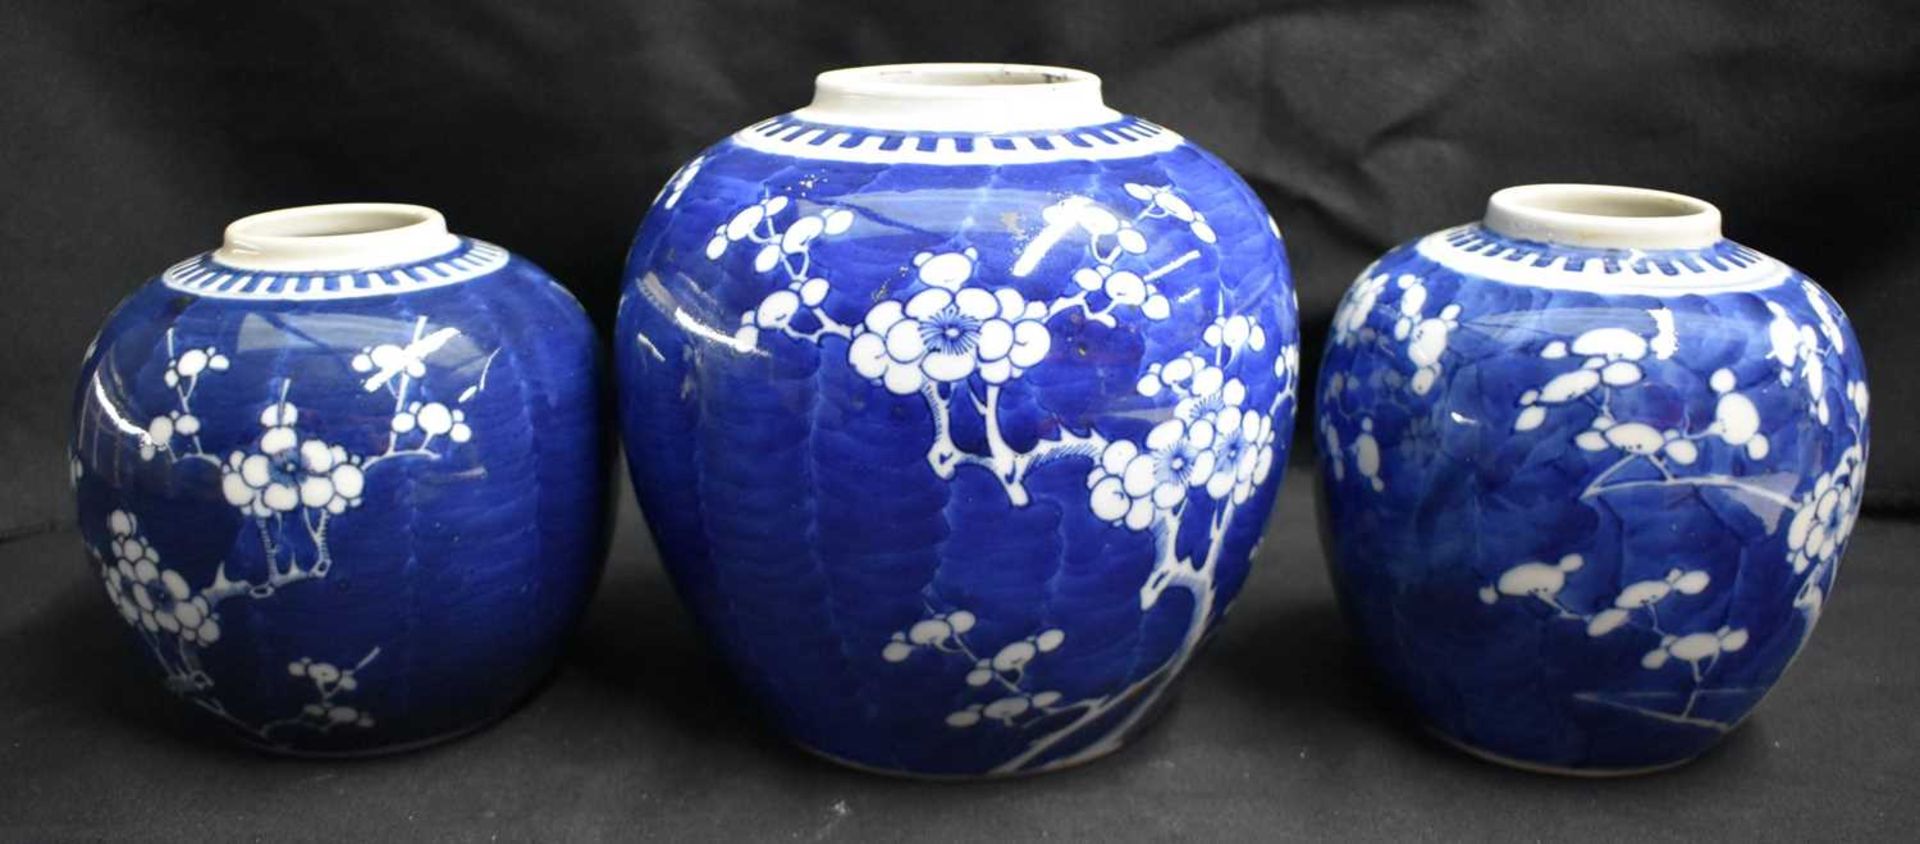 THREE 19TH CENTURY CHINESE BLUE AND WHITE PORCELAIN GINGER JARS Kangxi style. Largest 18 cm x 12 cm. - Image 2 of 8